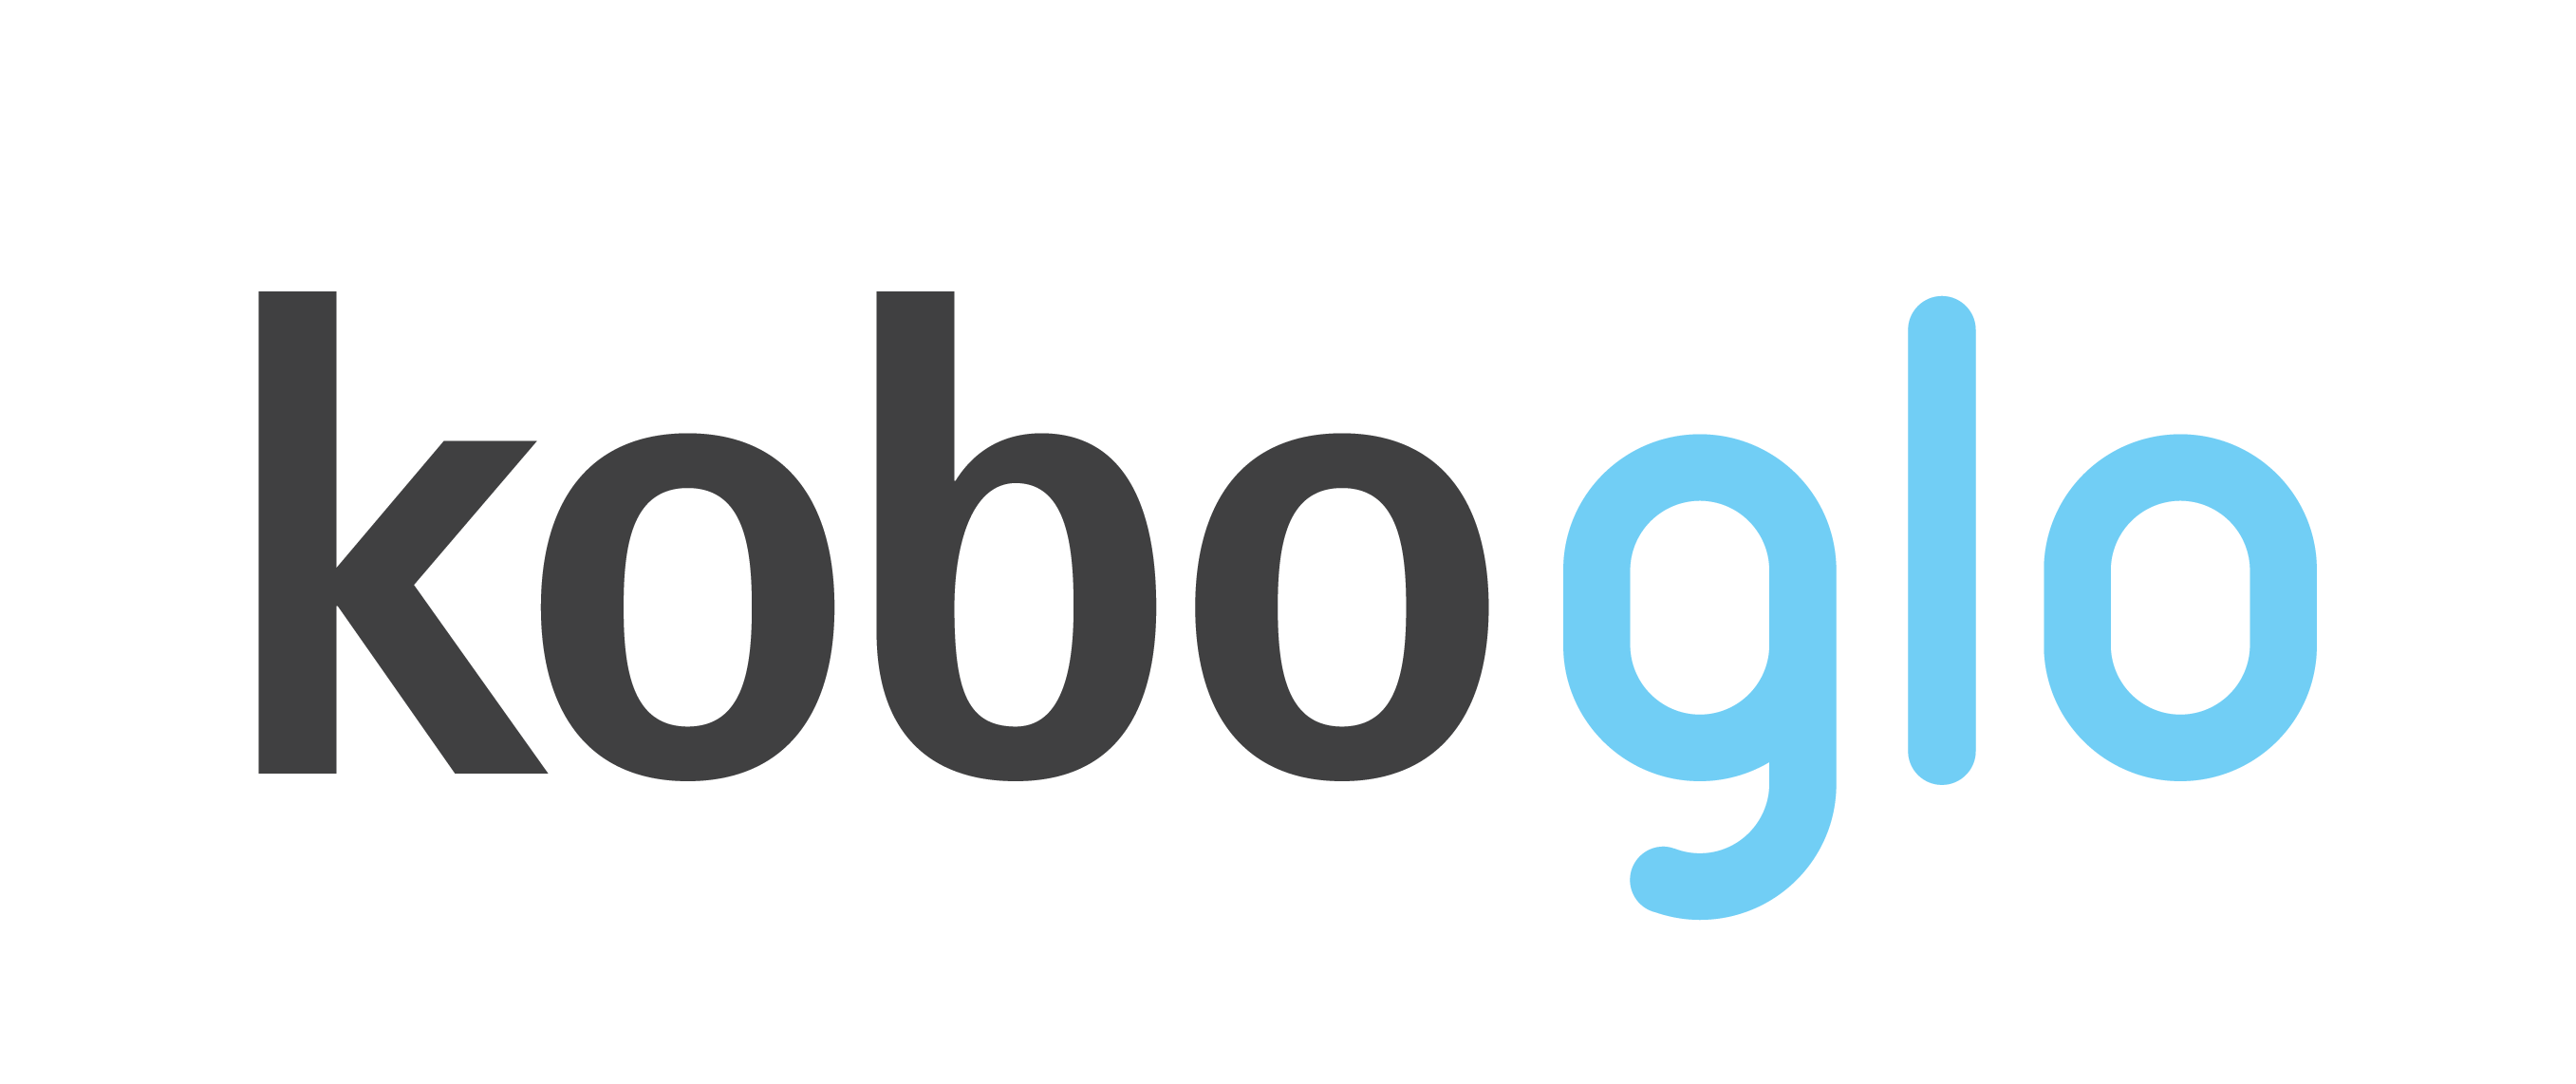 Kobo Logo - File:Kobo Glo Logo.png - Wikimedia Commons